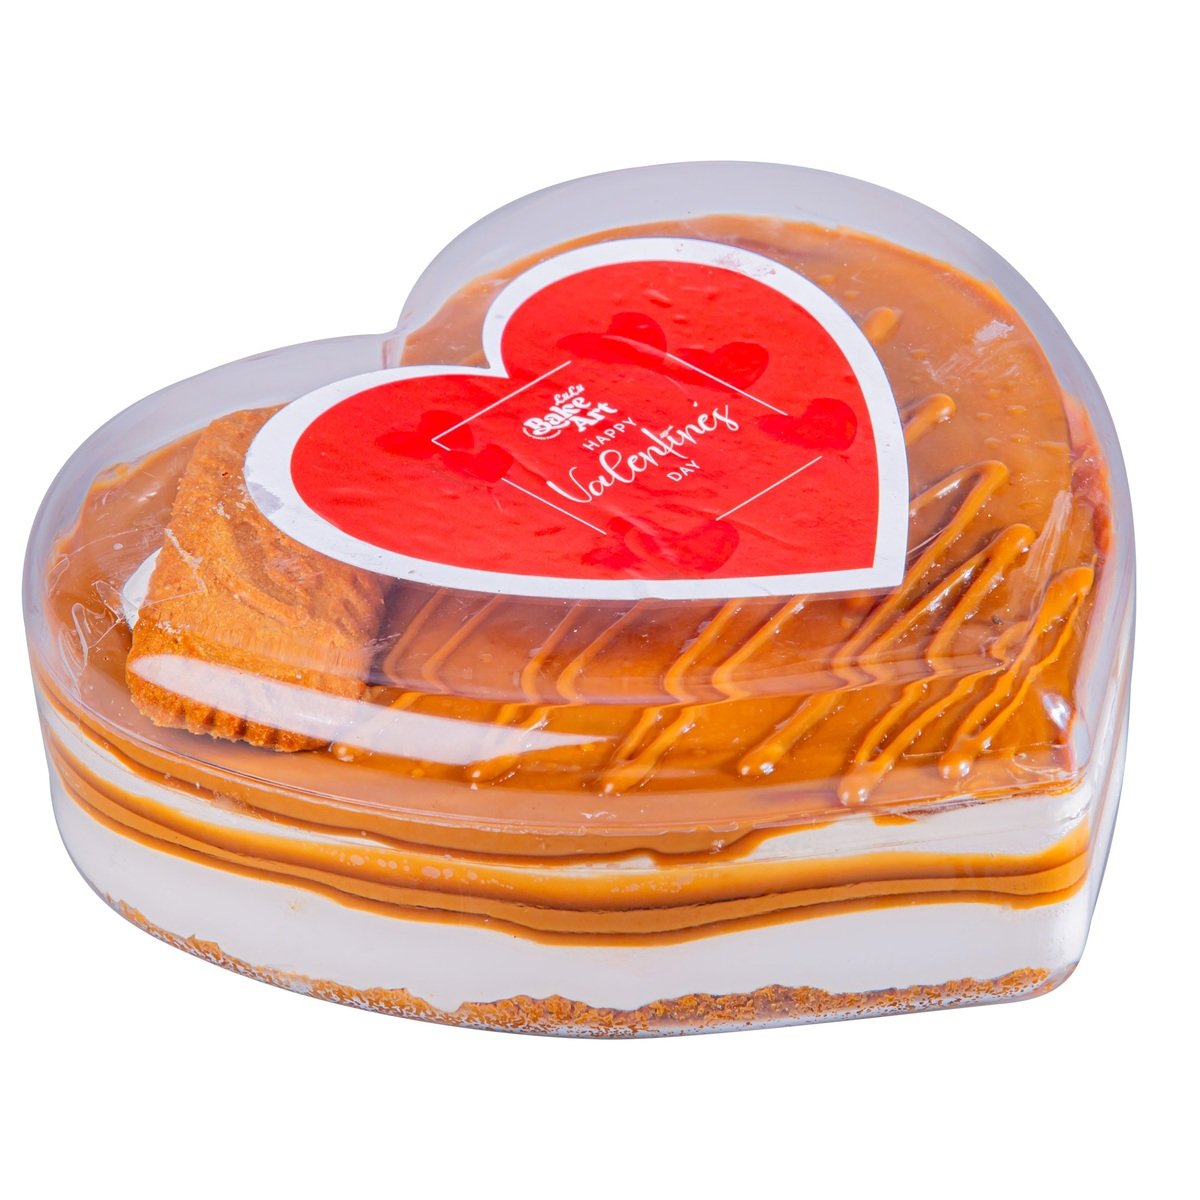 Lotus Heart Shape Cake 600 g